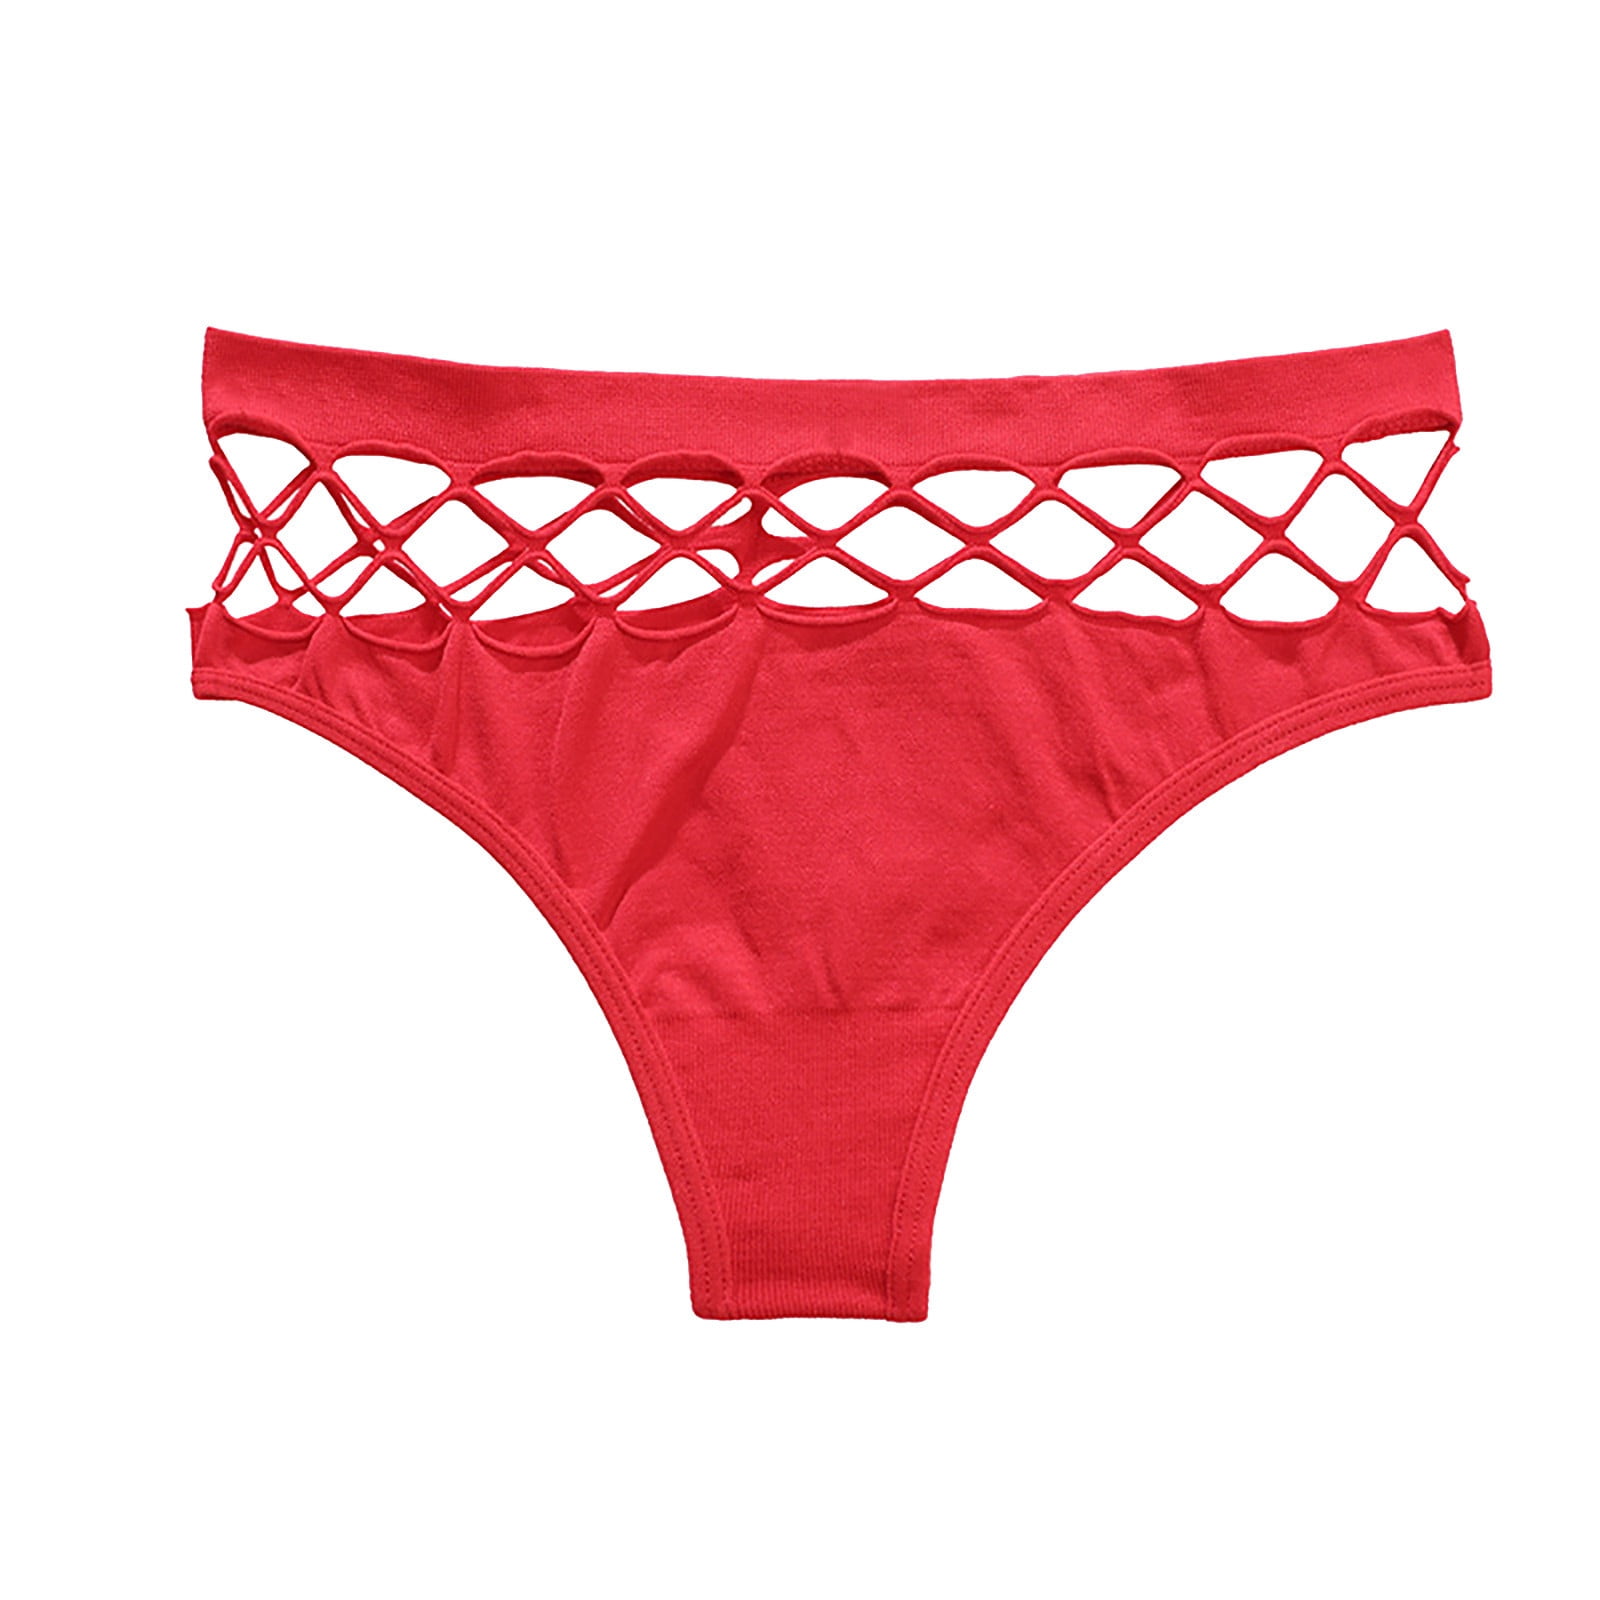 XFLWAM Women's Crochet Lace Hollow Out Panties Sexy Seamless Underwear  Solid High Waist Briefs Red L 